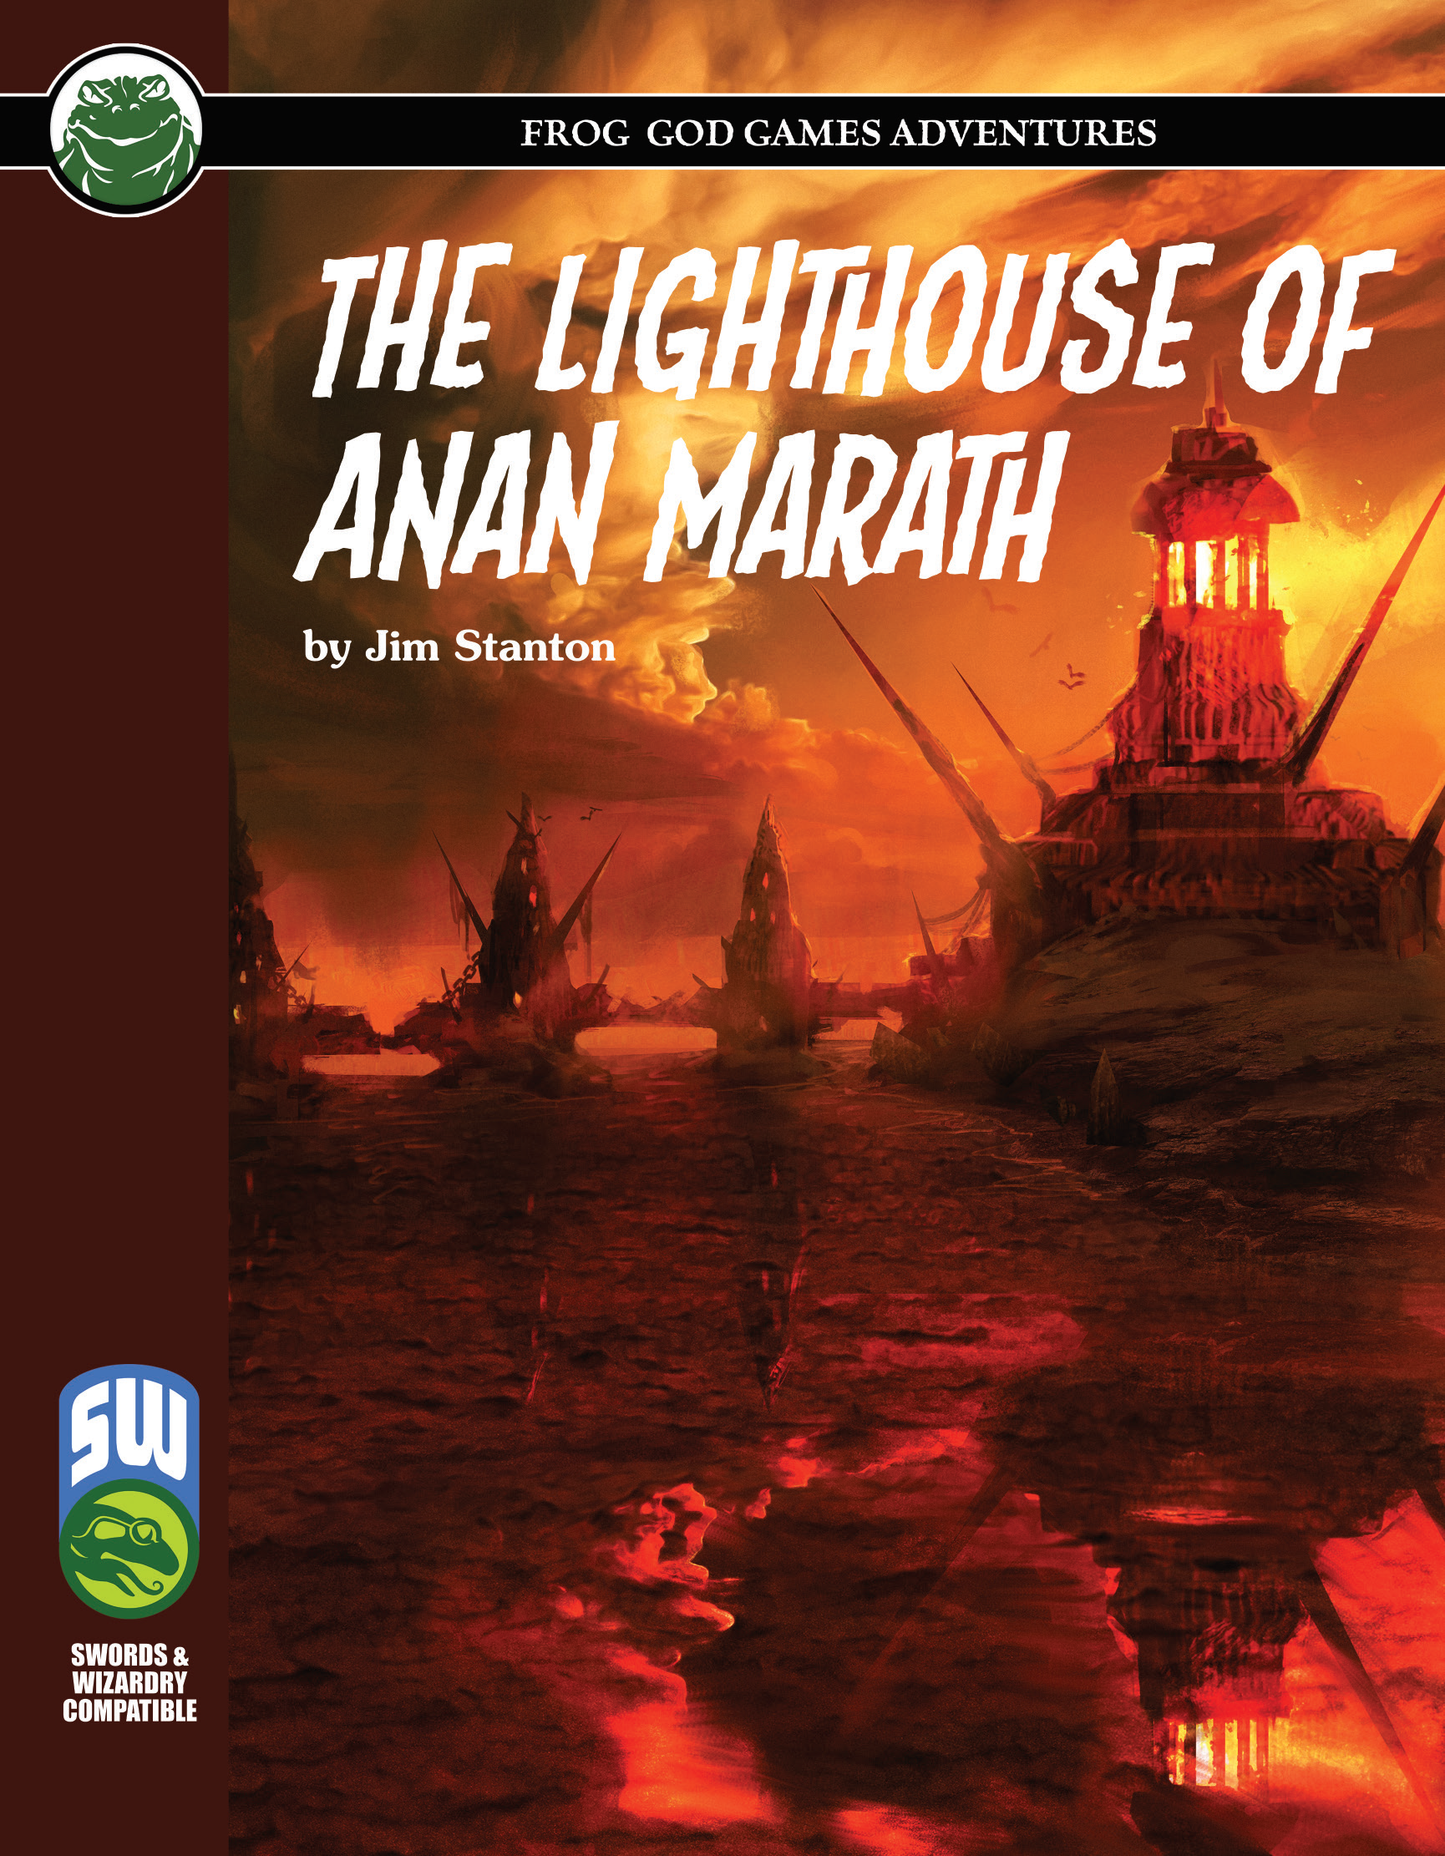 The Lighthouse of Anan Marath